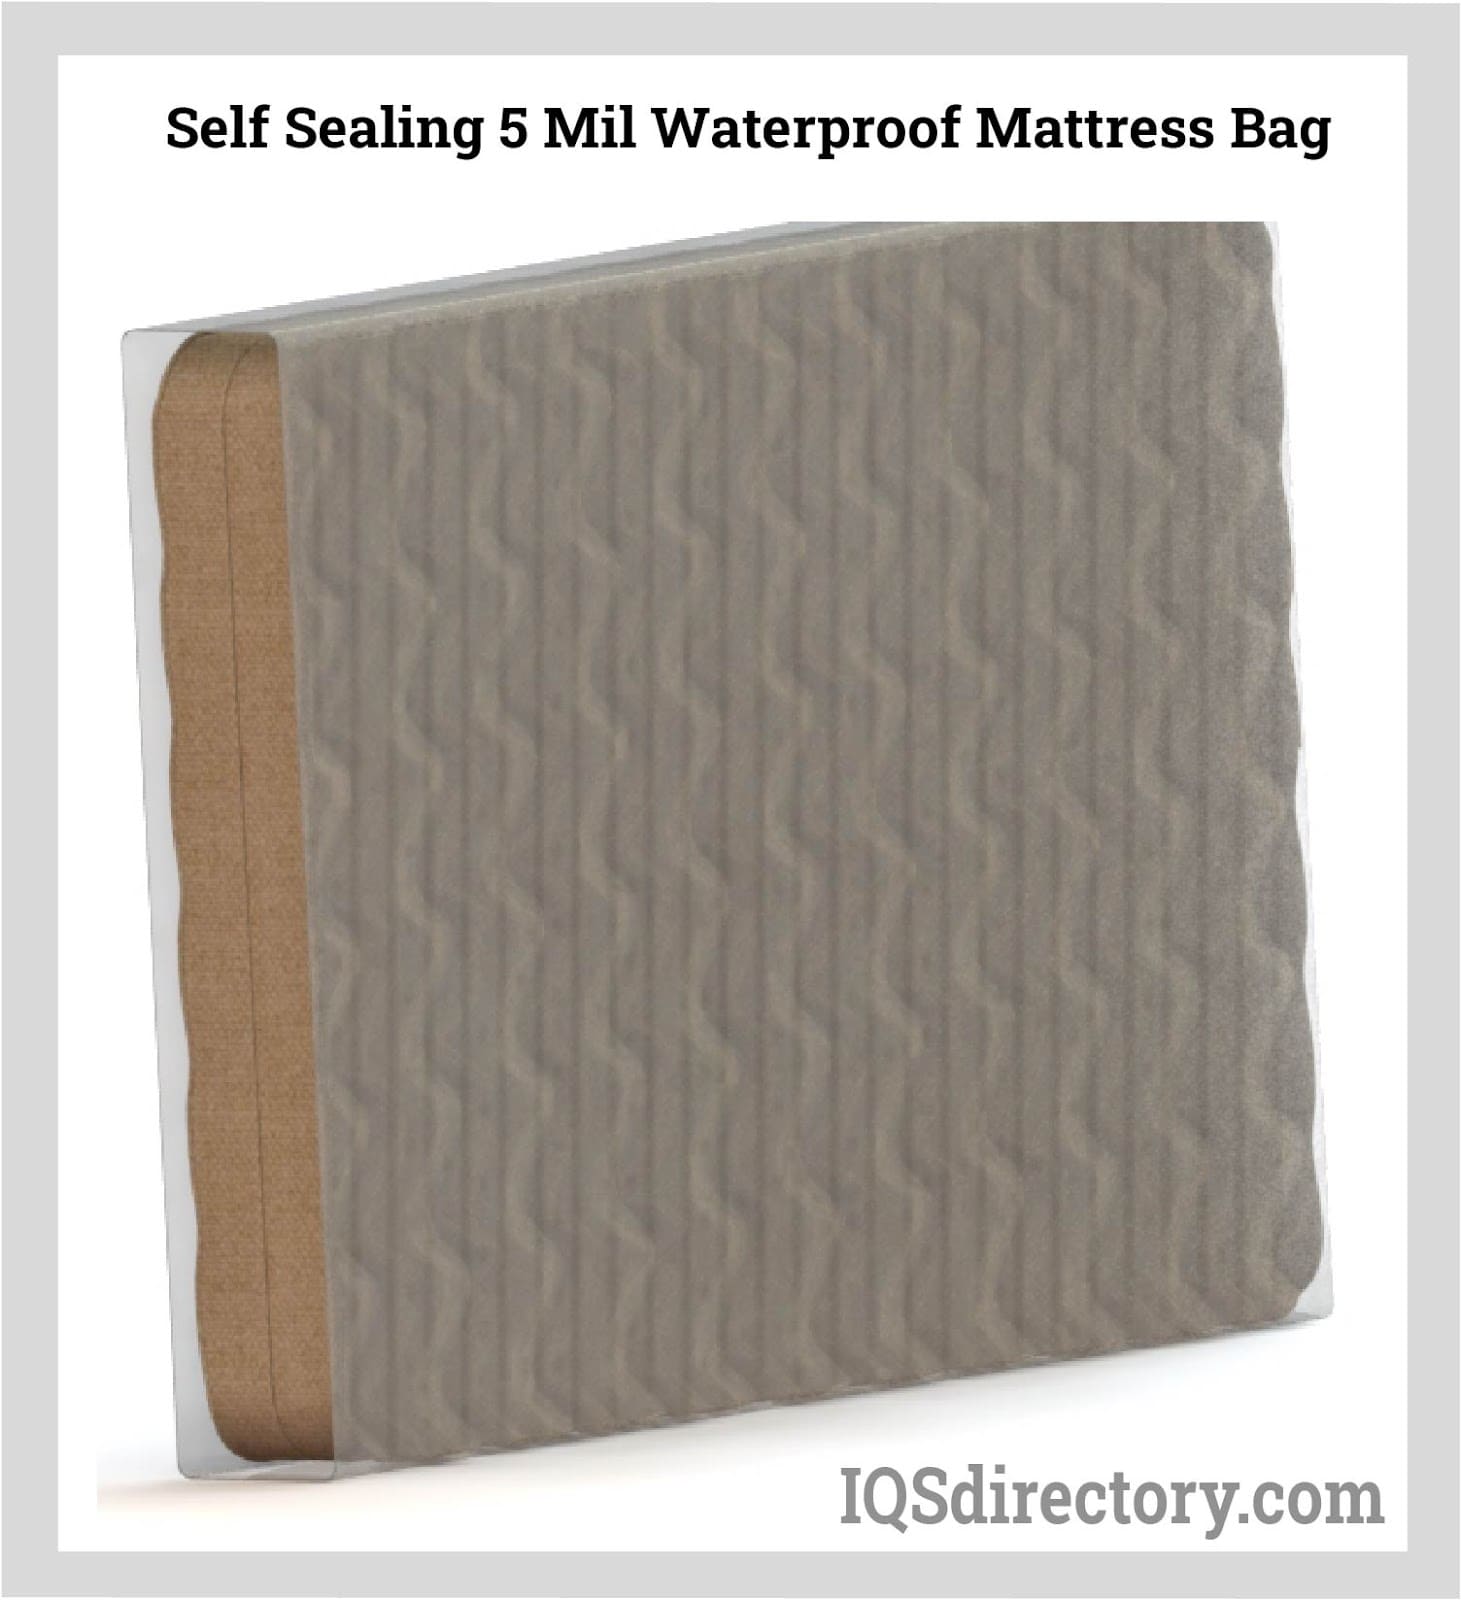 Self Sealing 5 mil Waterproof Mattress Bag